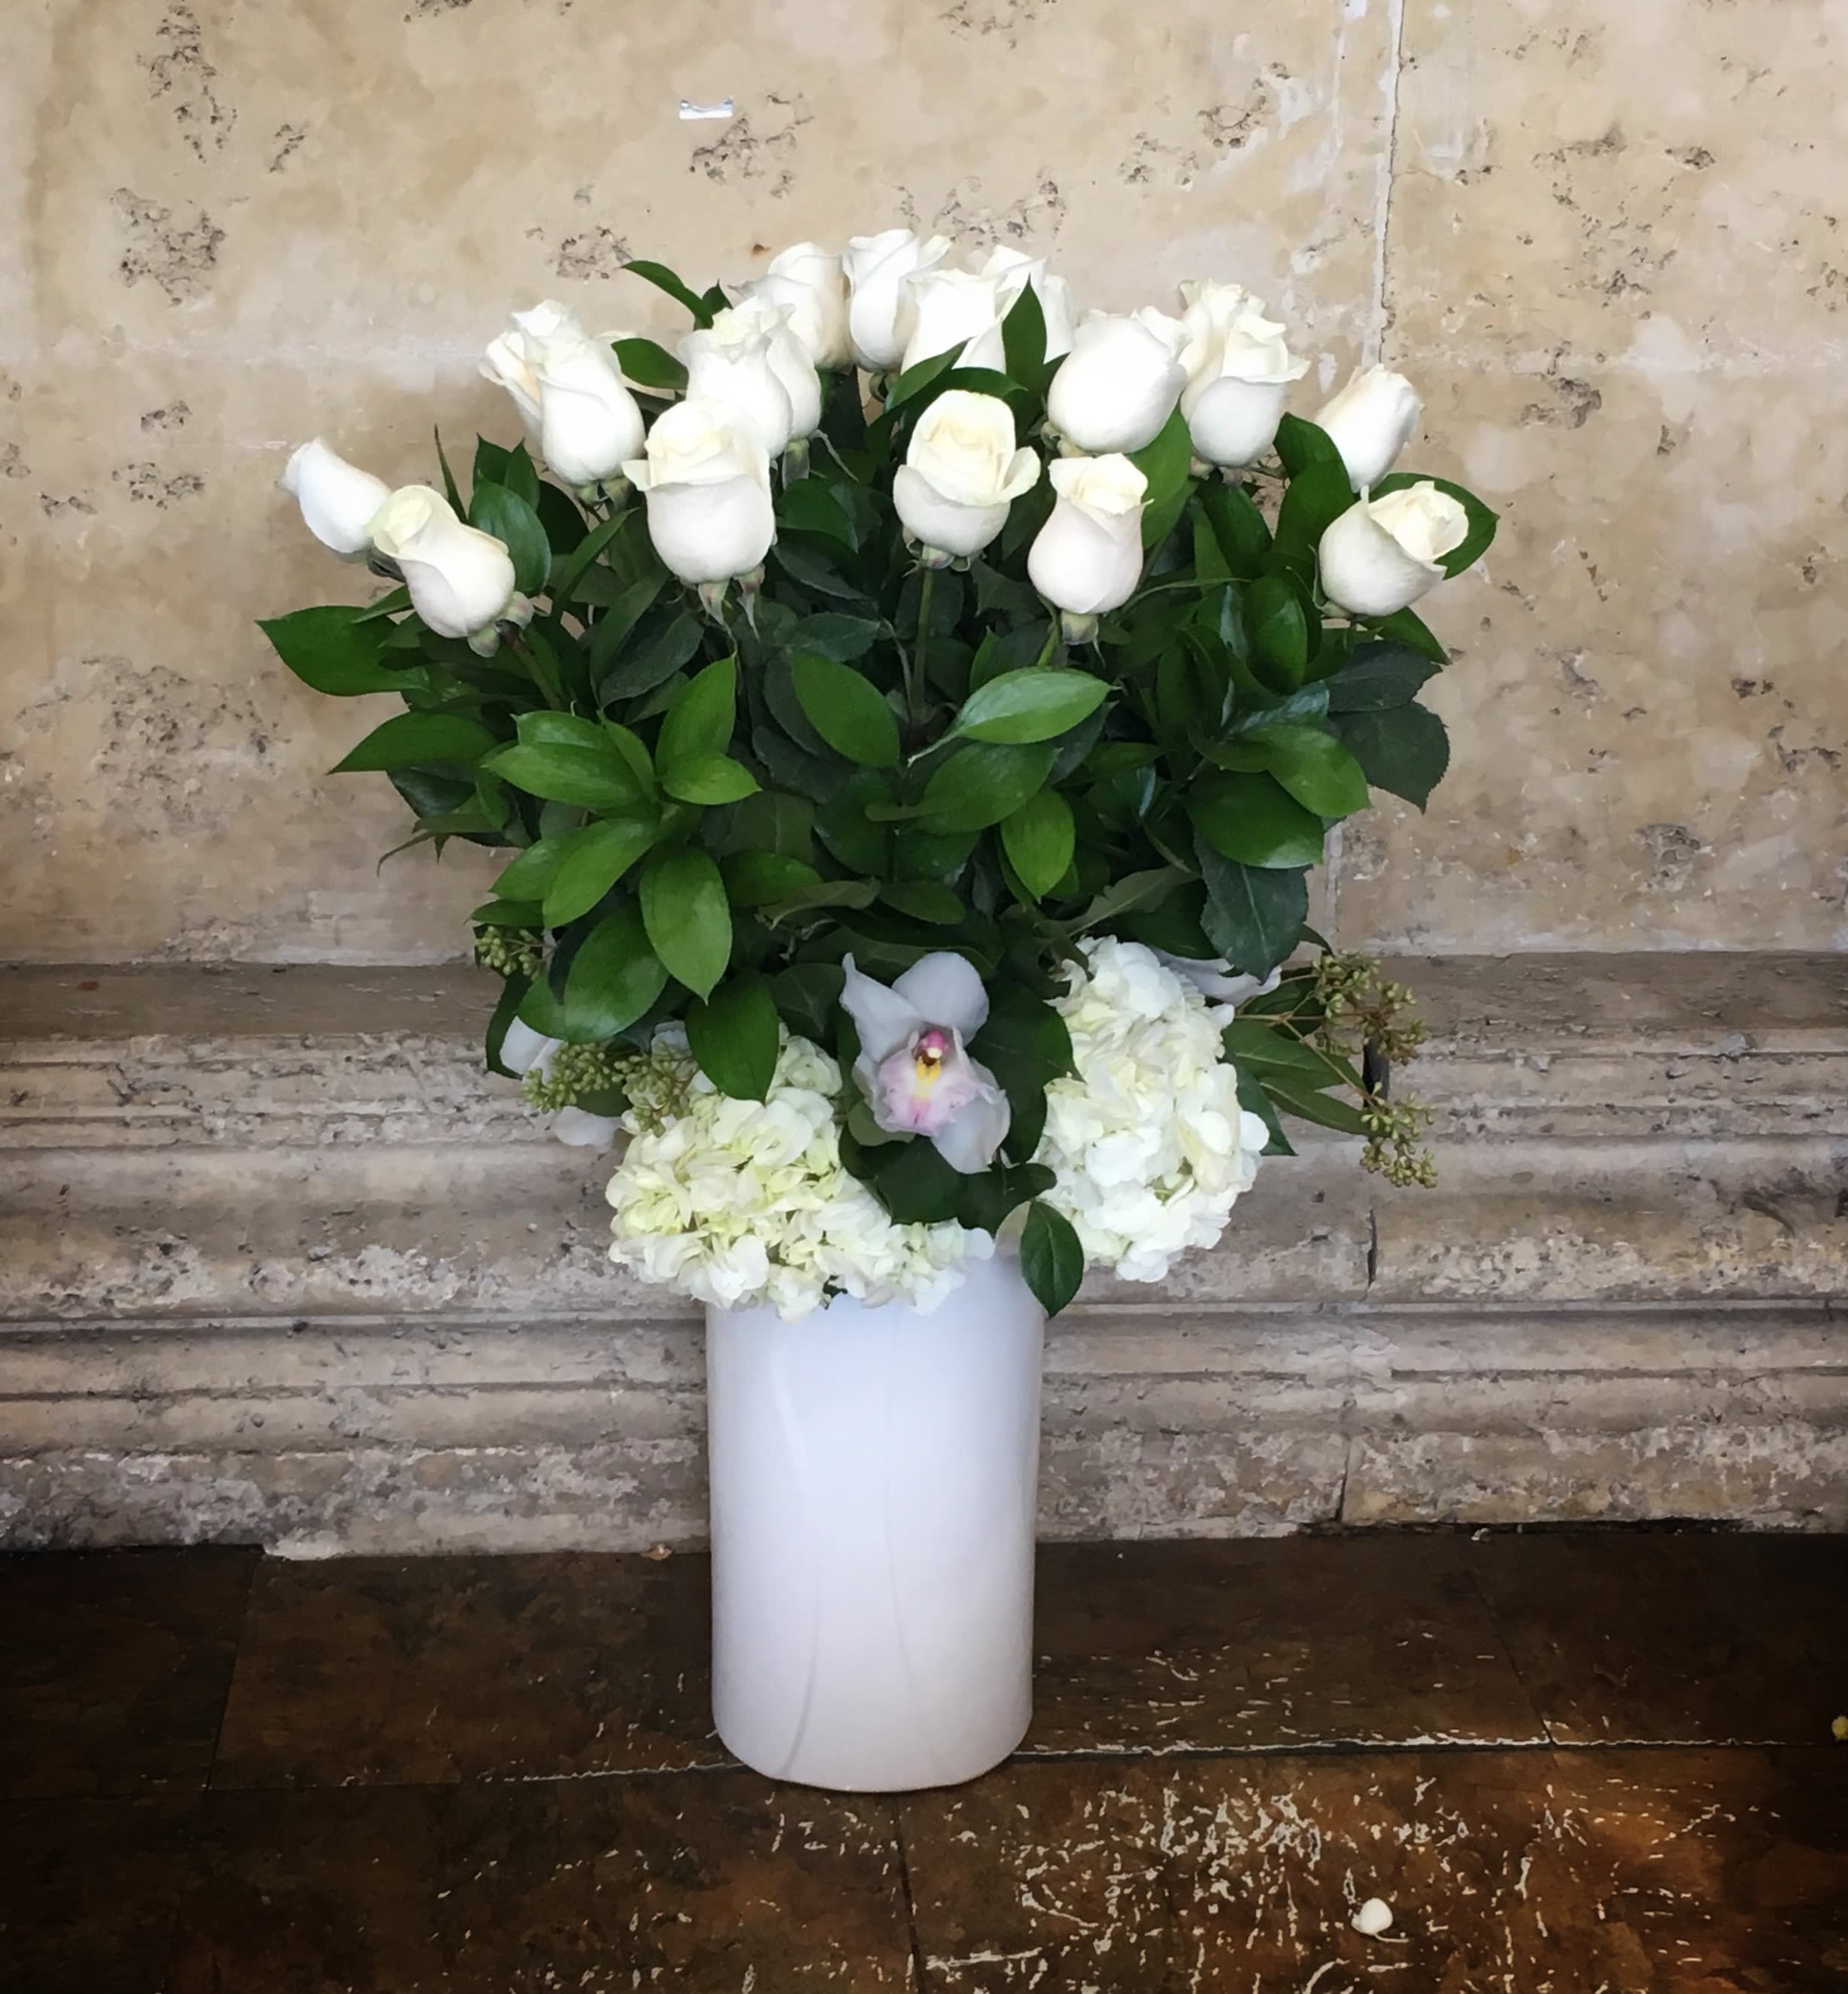 Double White Roses - Two dozen premium White Roses, Hydrangea,... in tall ceramic vase.